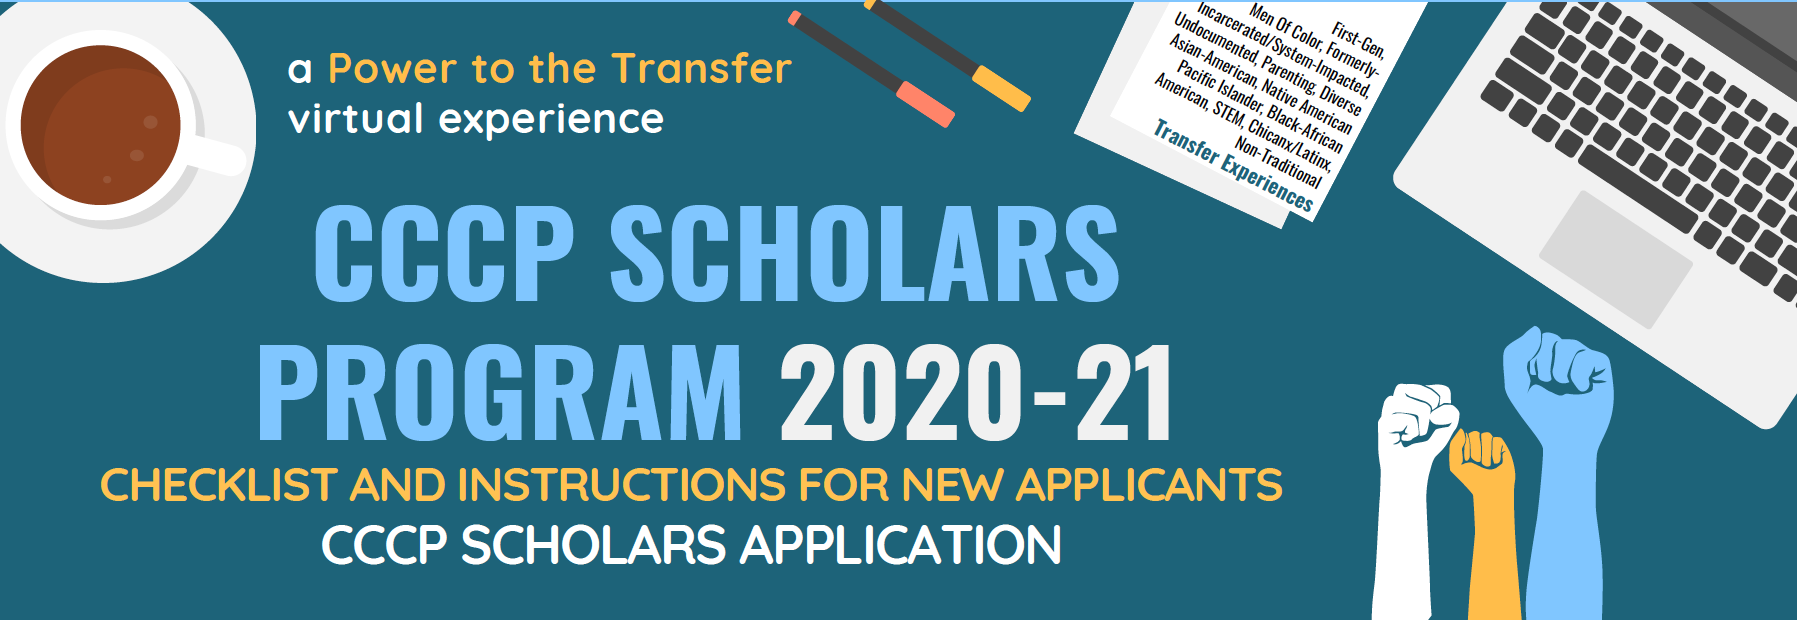 CCCP Scholars Program Flyer